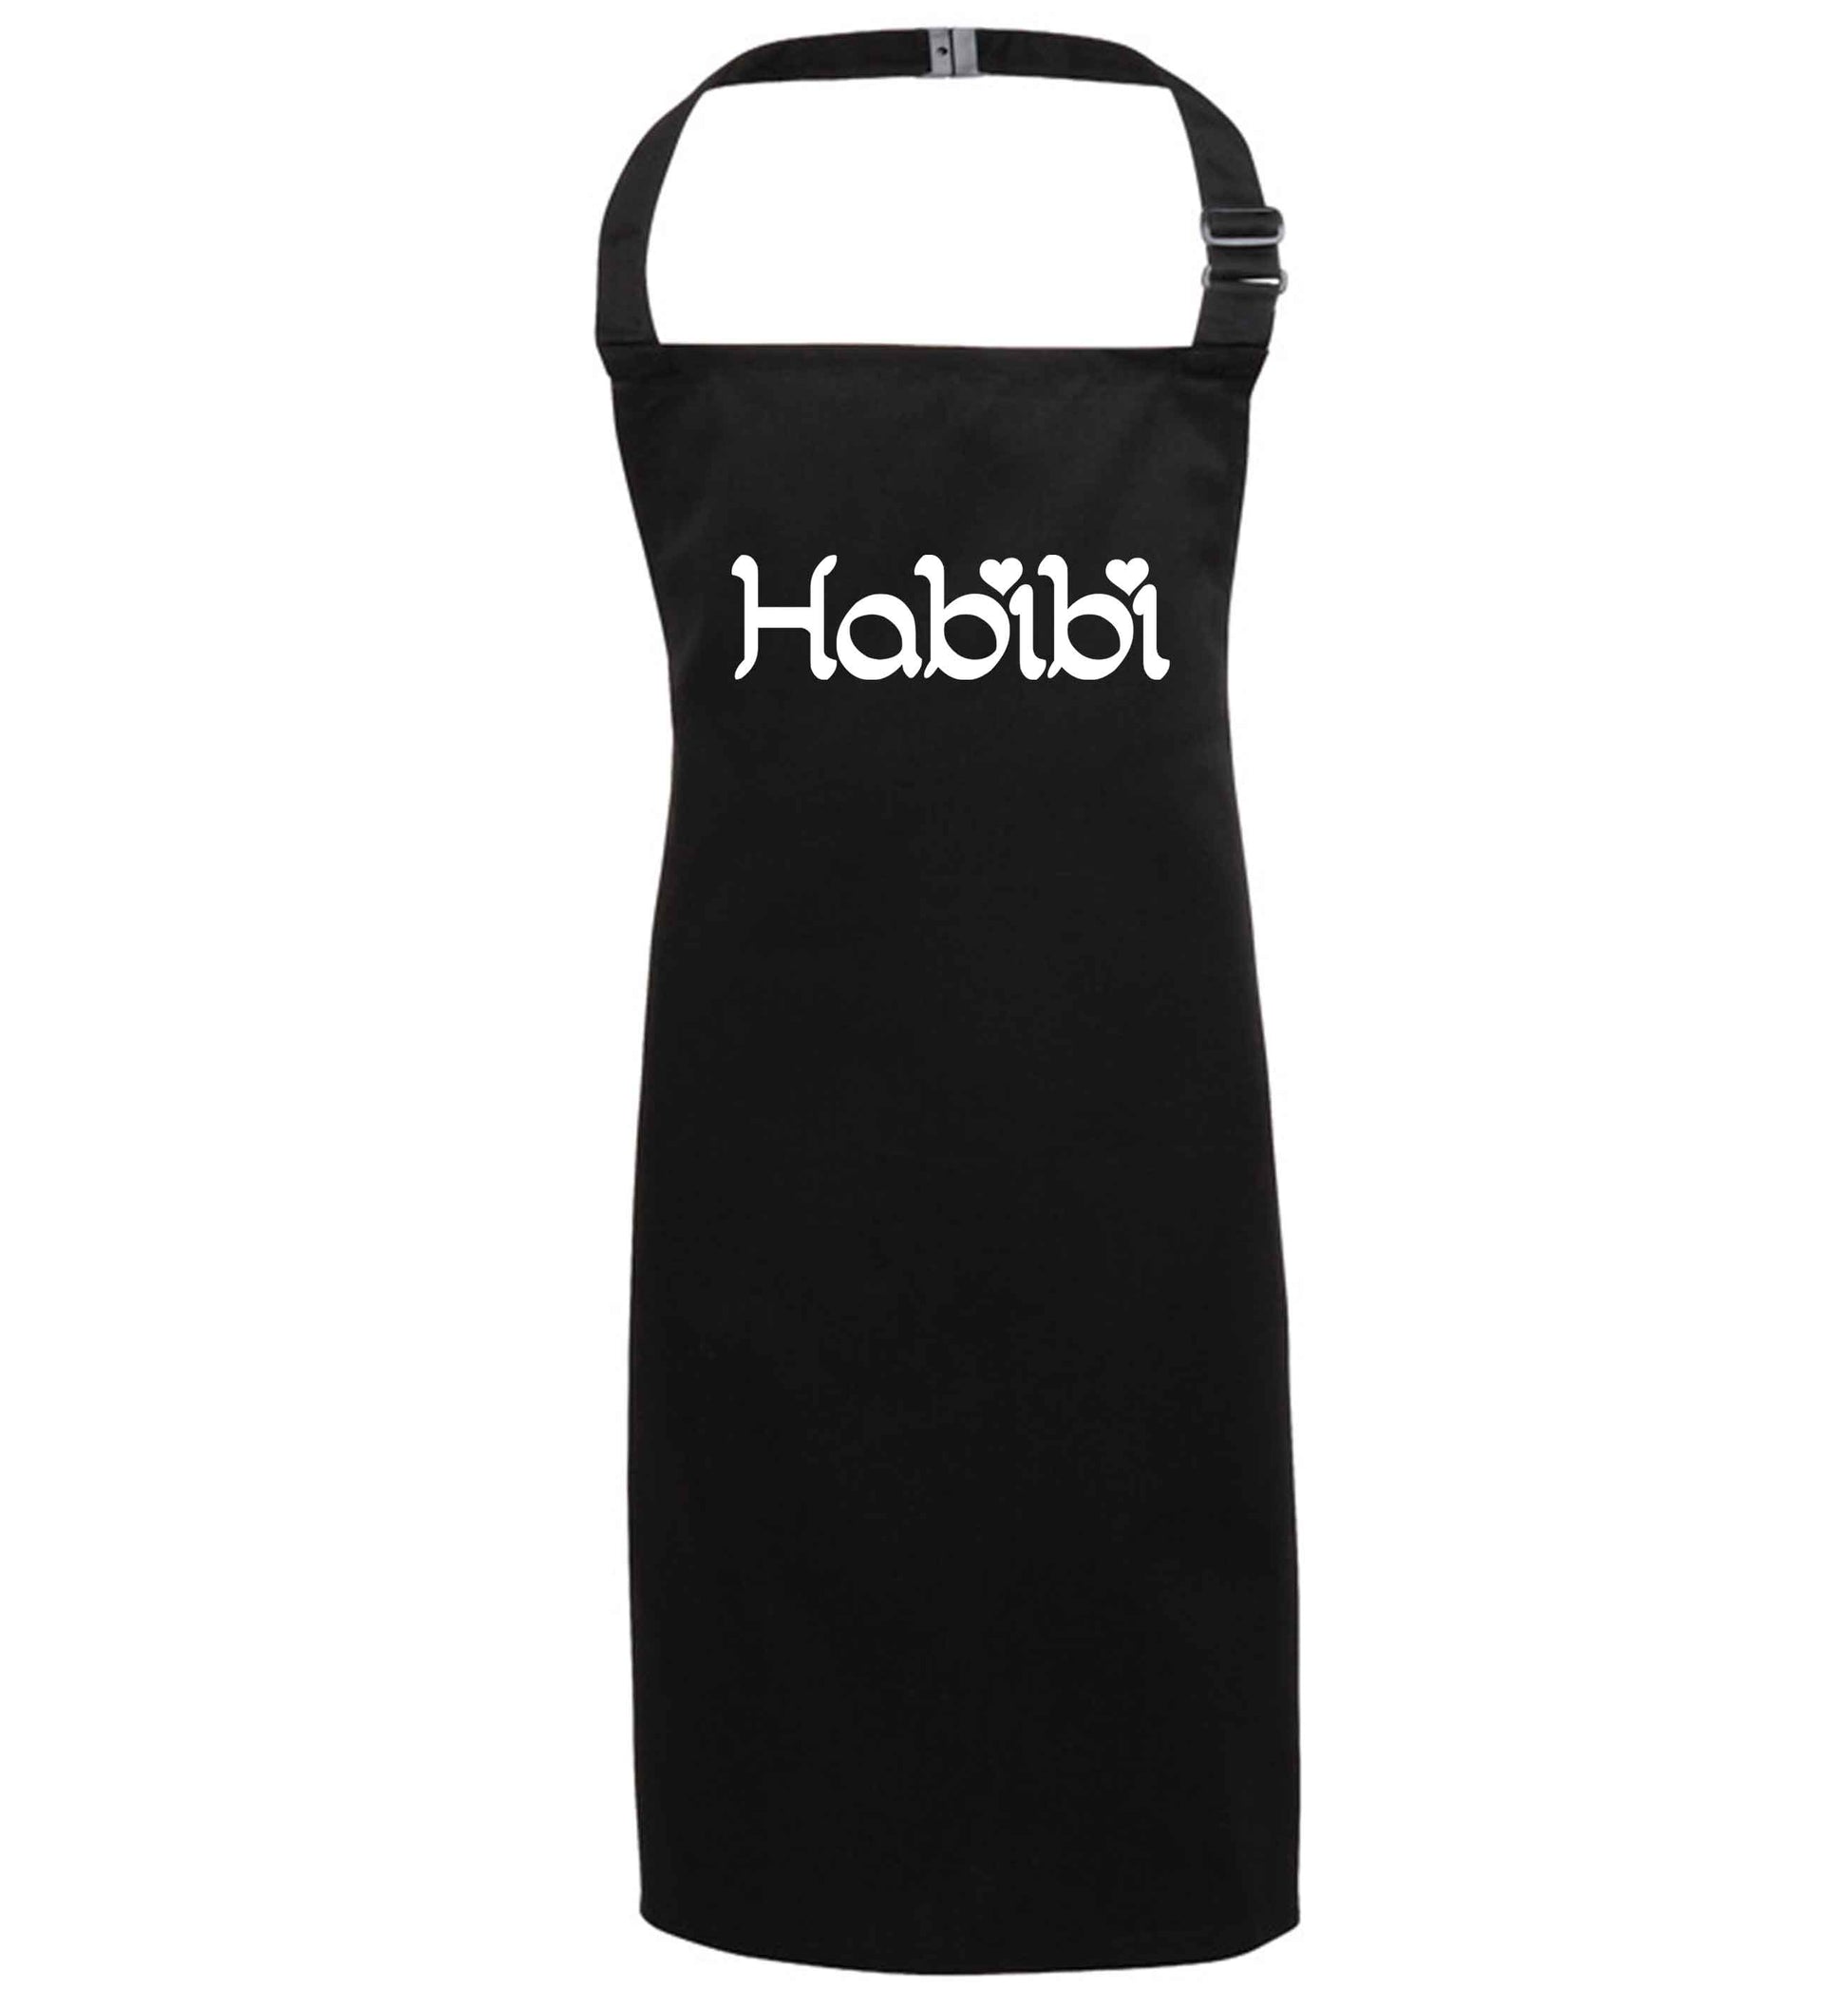 Habibi black apron 7-10 years